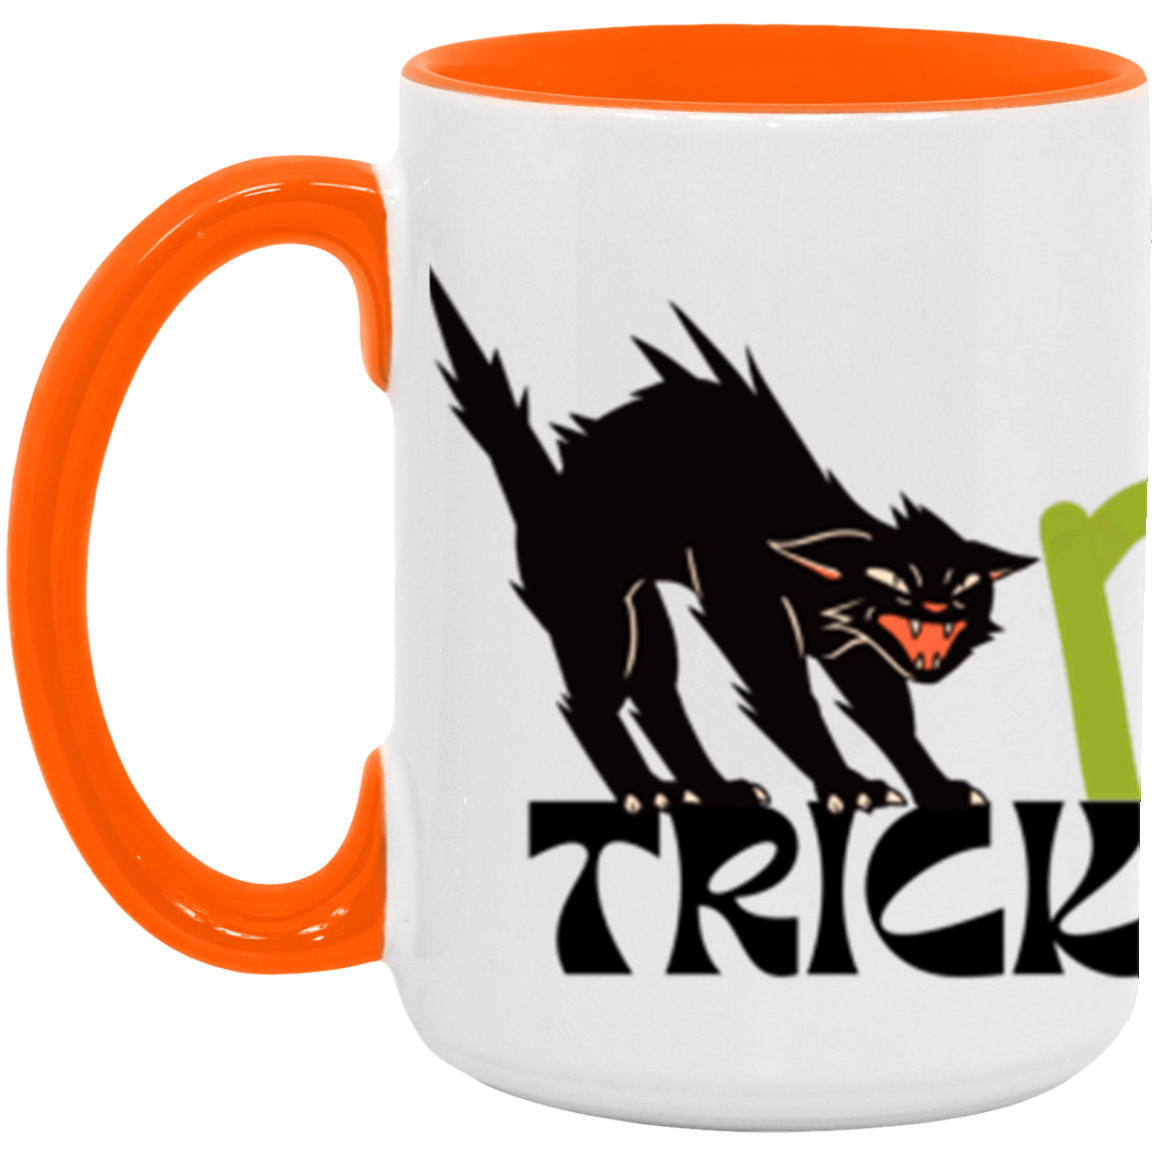 Orange and Black-Cat Pot Of Gold Halloween-15 oz Mug-Cup